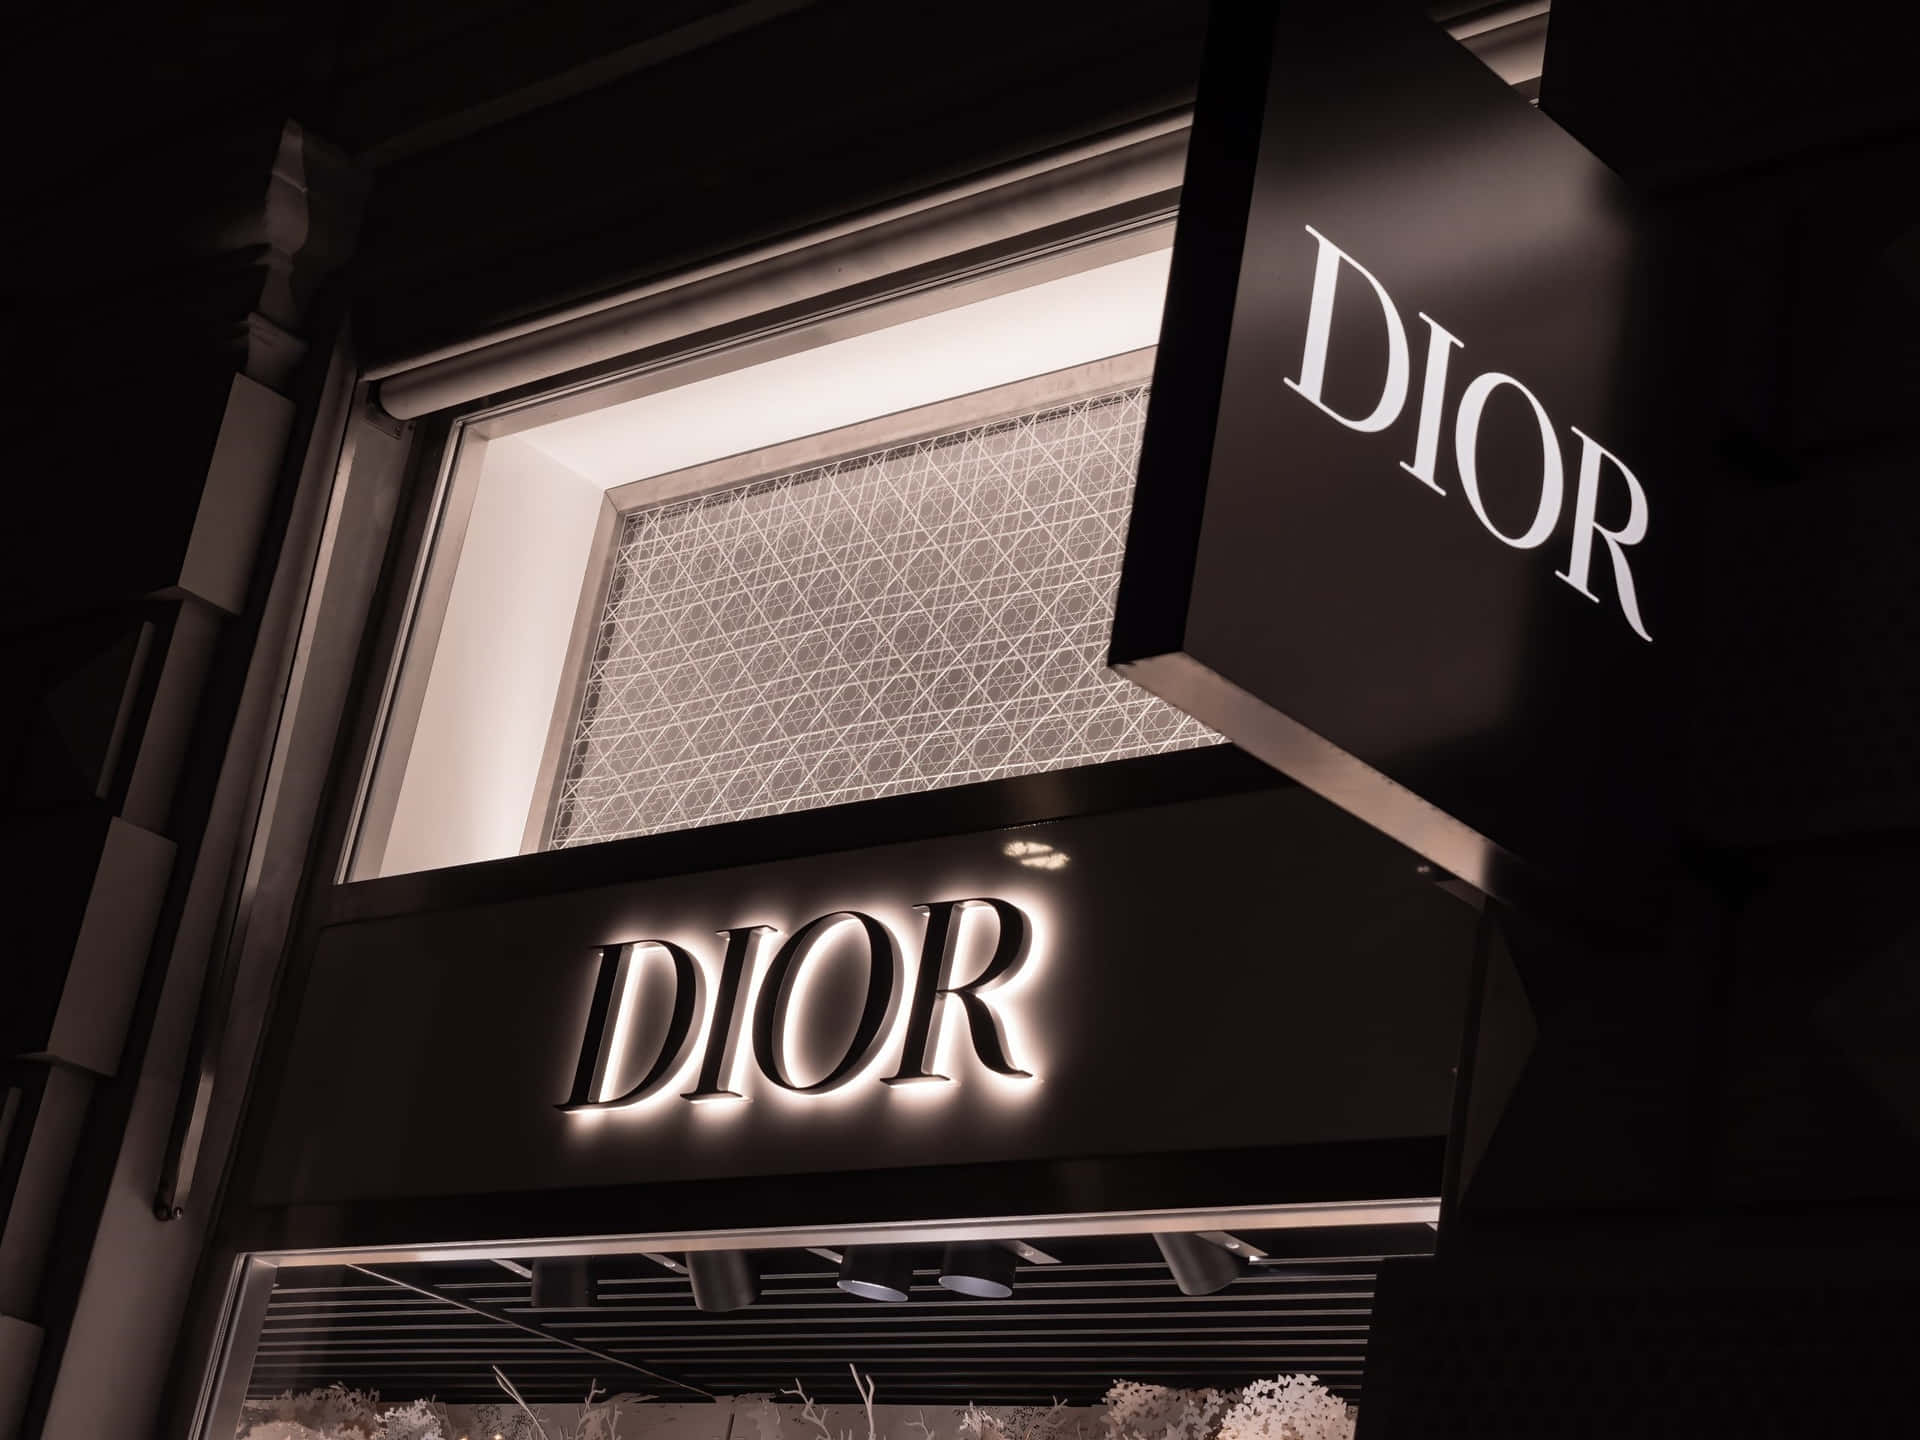 Elegant Dior Storefrontat Night Wallpaper